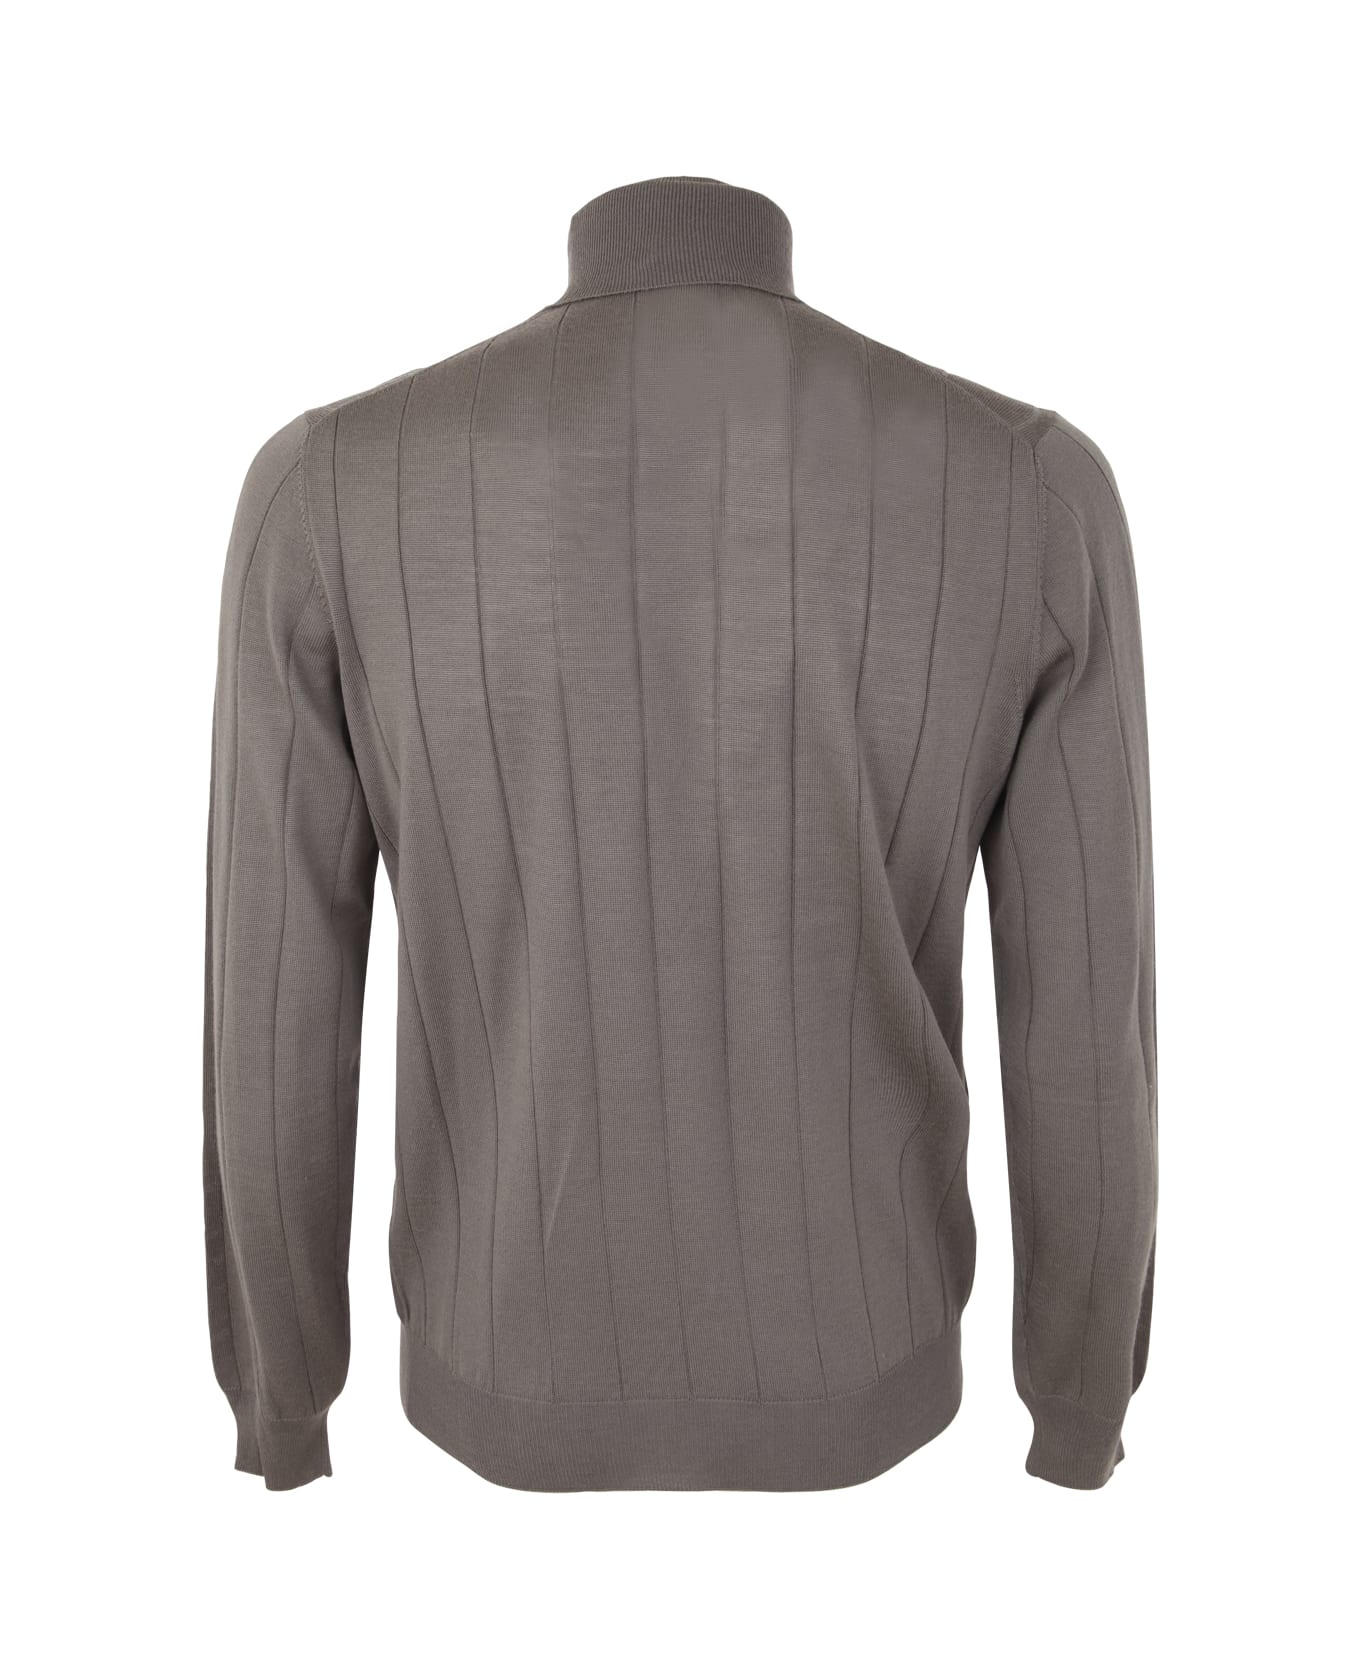 Filippo De Laurentiis Royal Merino Long Sleeves Turtle Neck Sweater - Steel